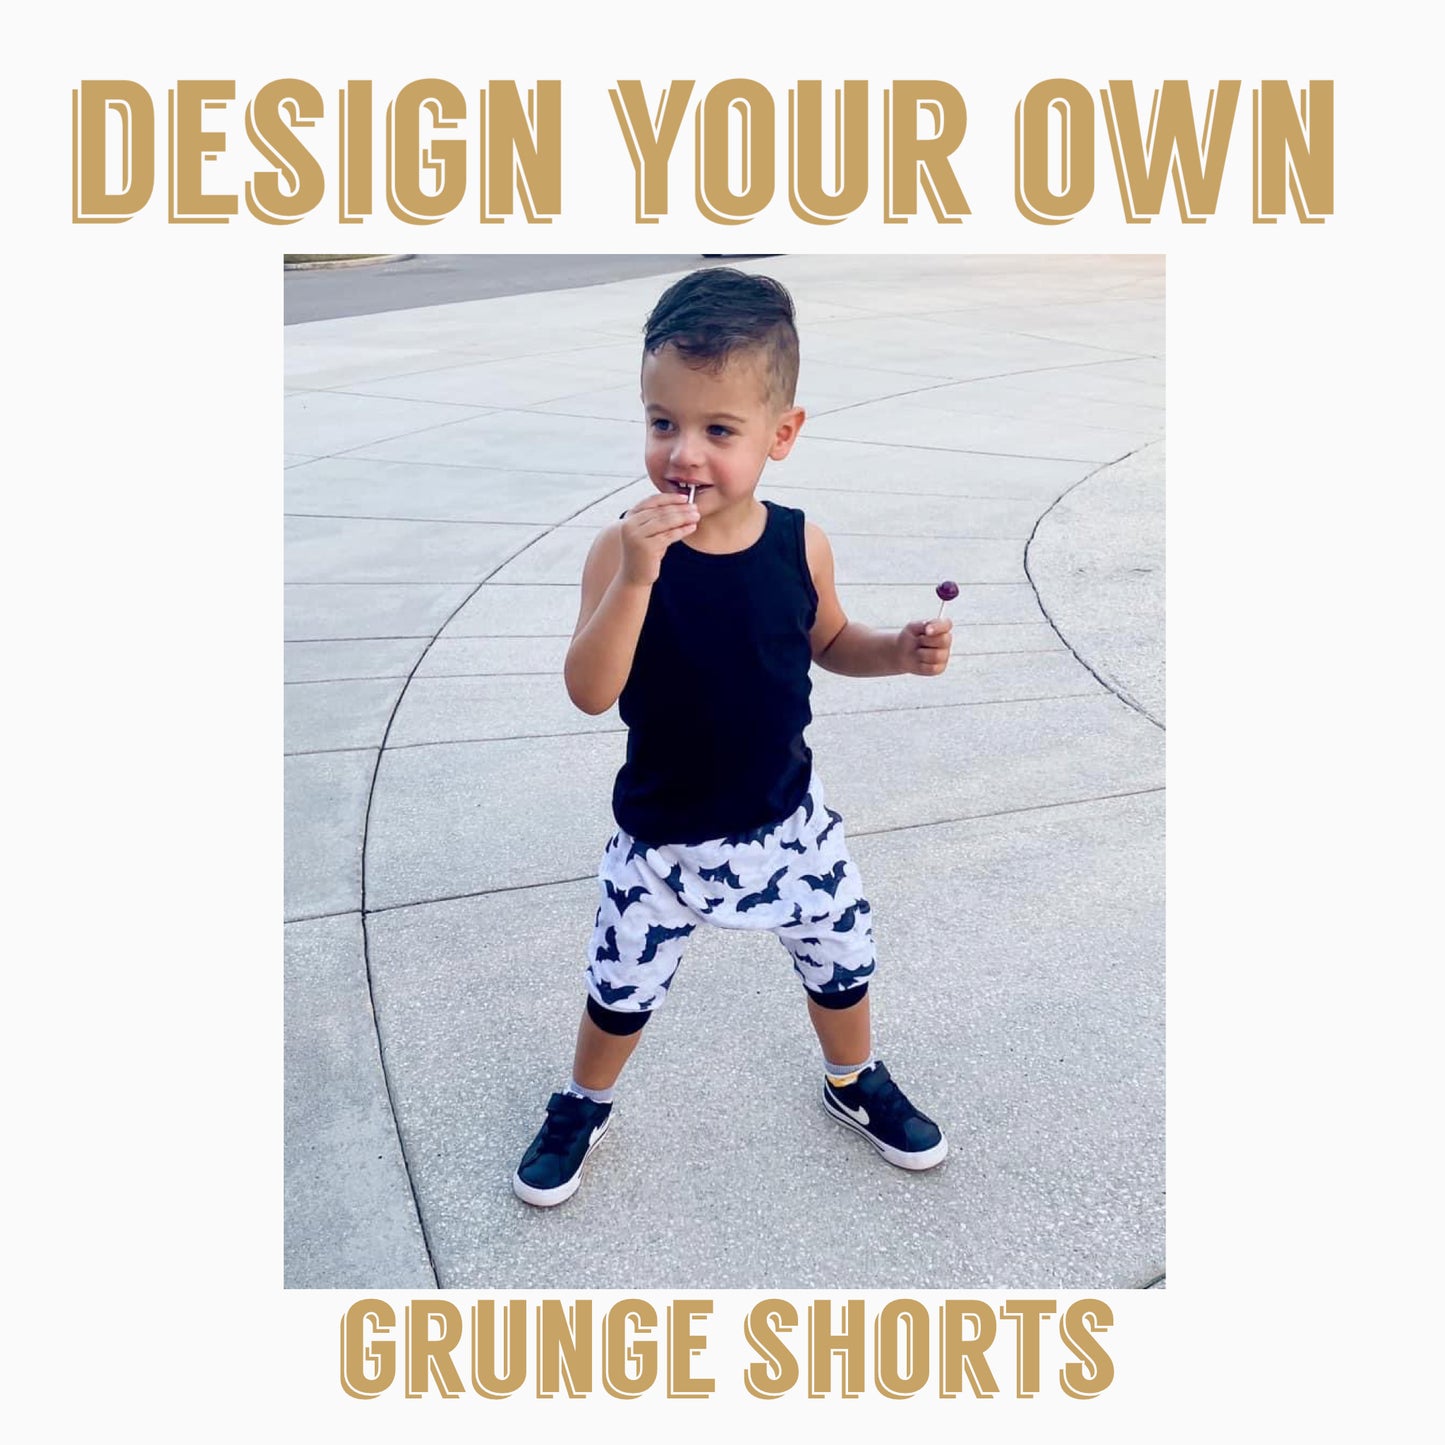 Design your own | Grunge shorts